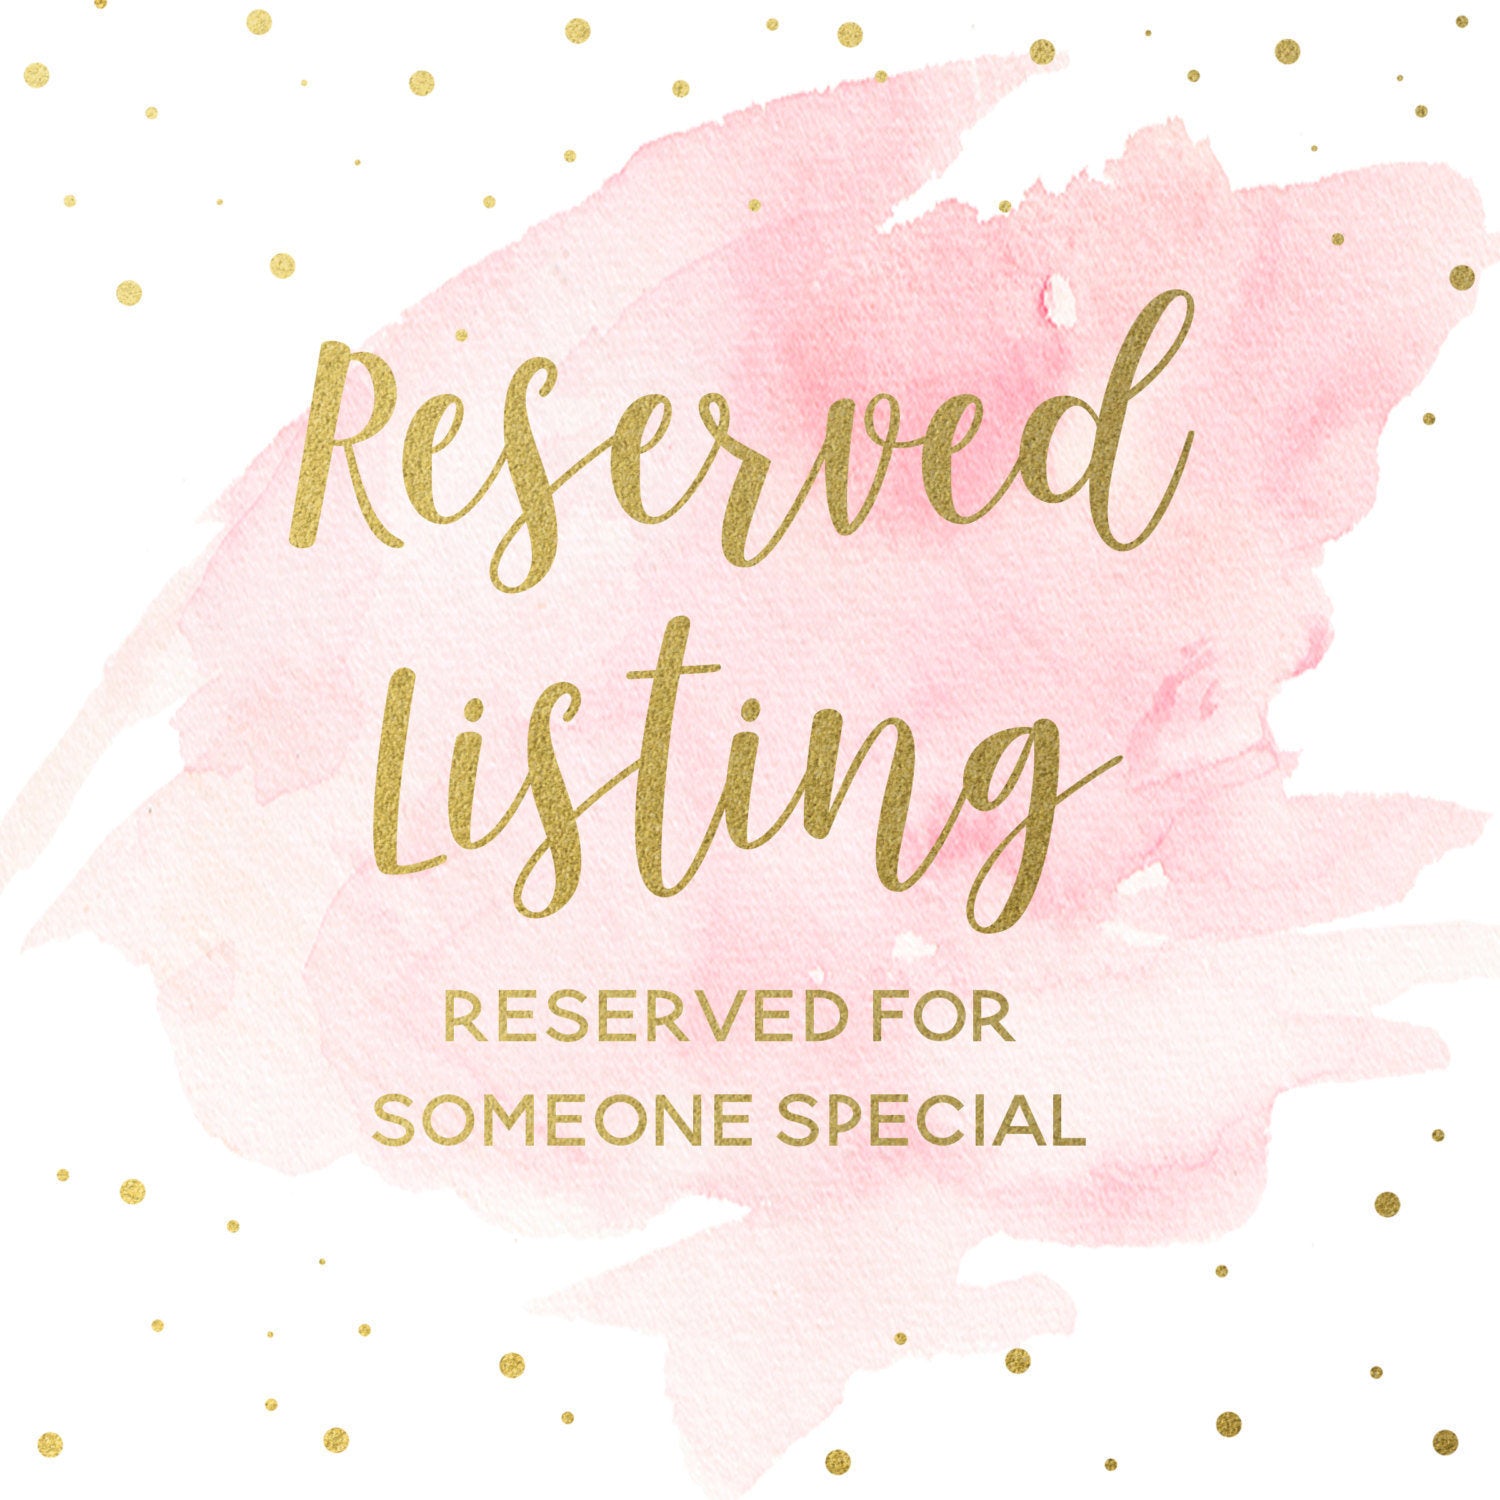 Reserved Listing - Rachel St